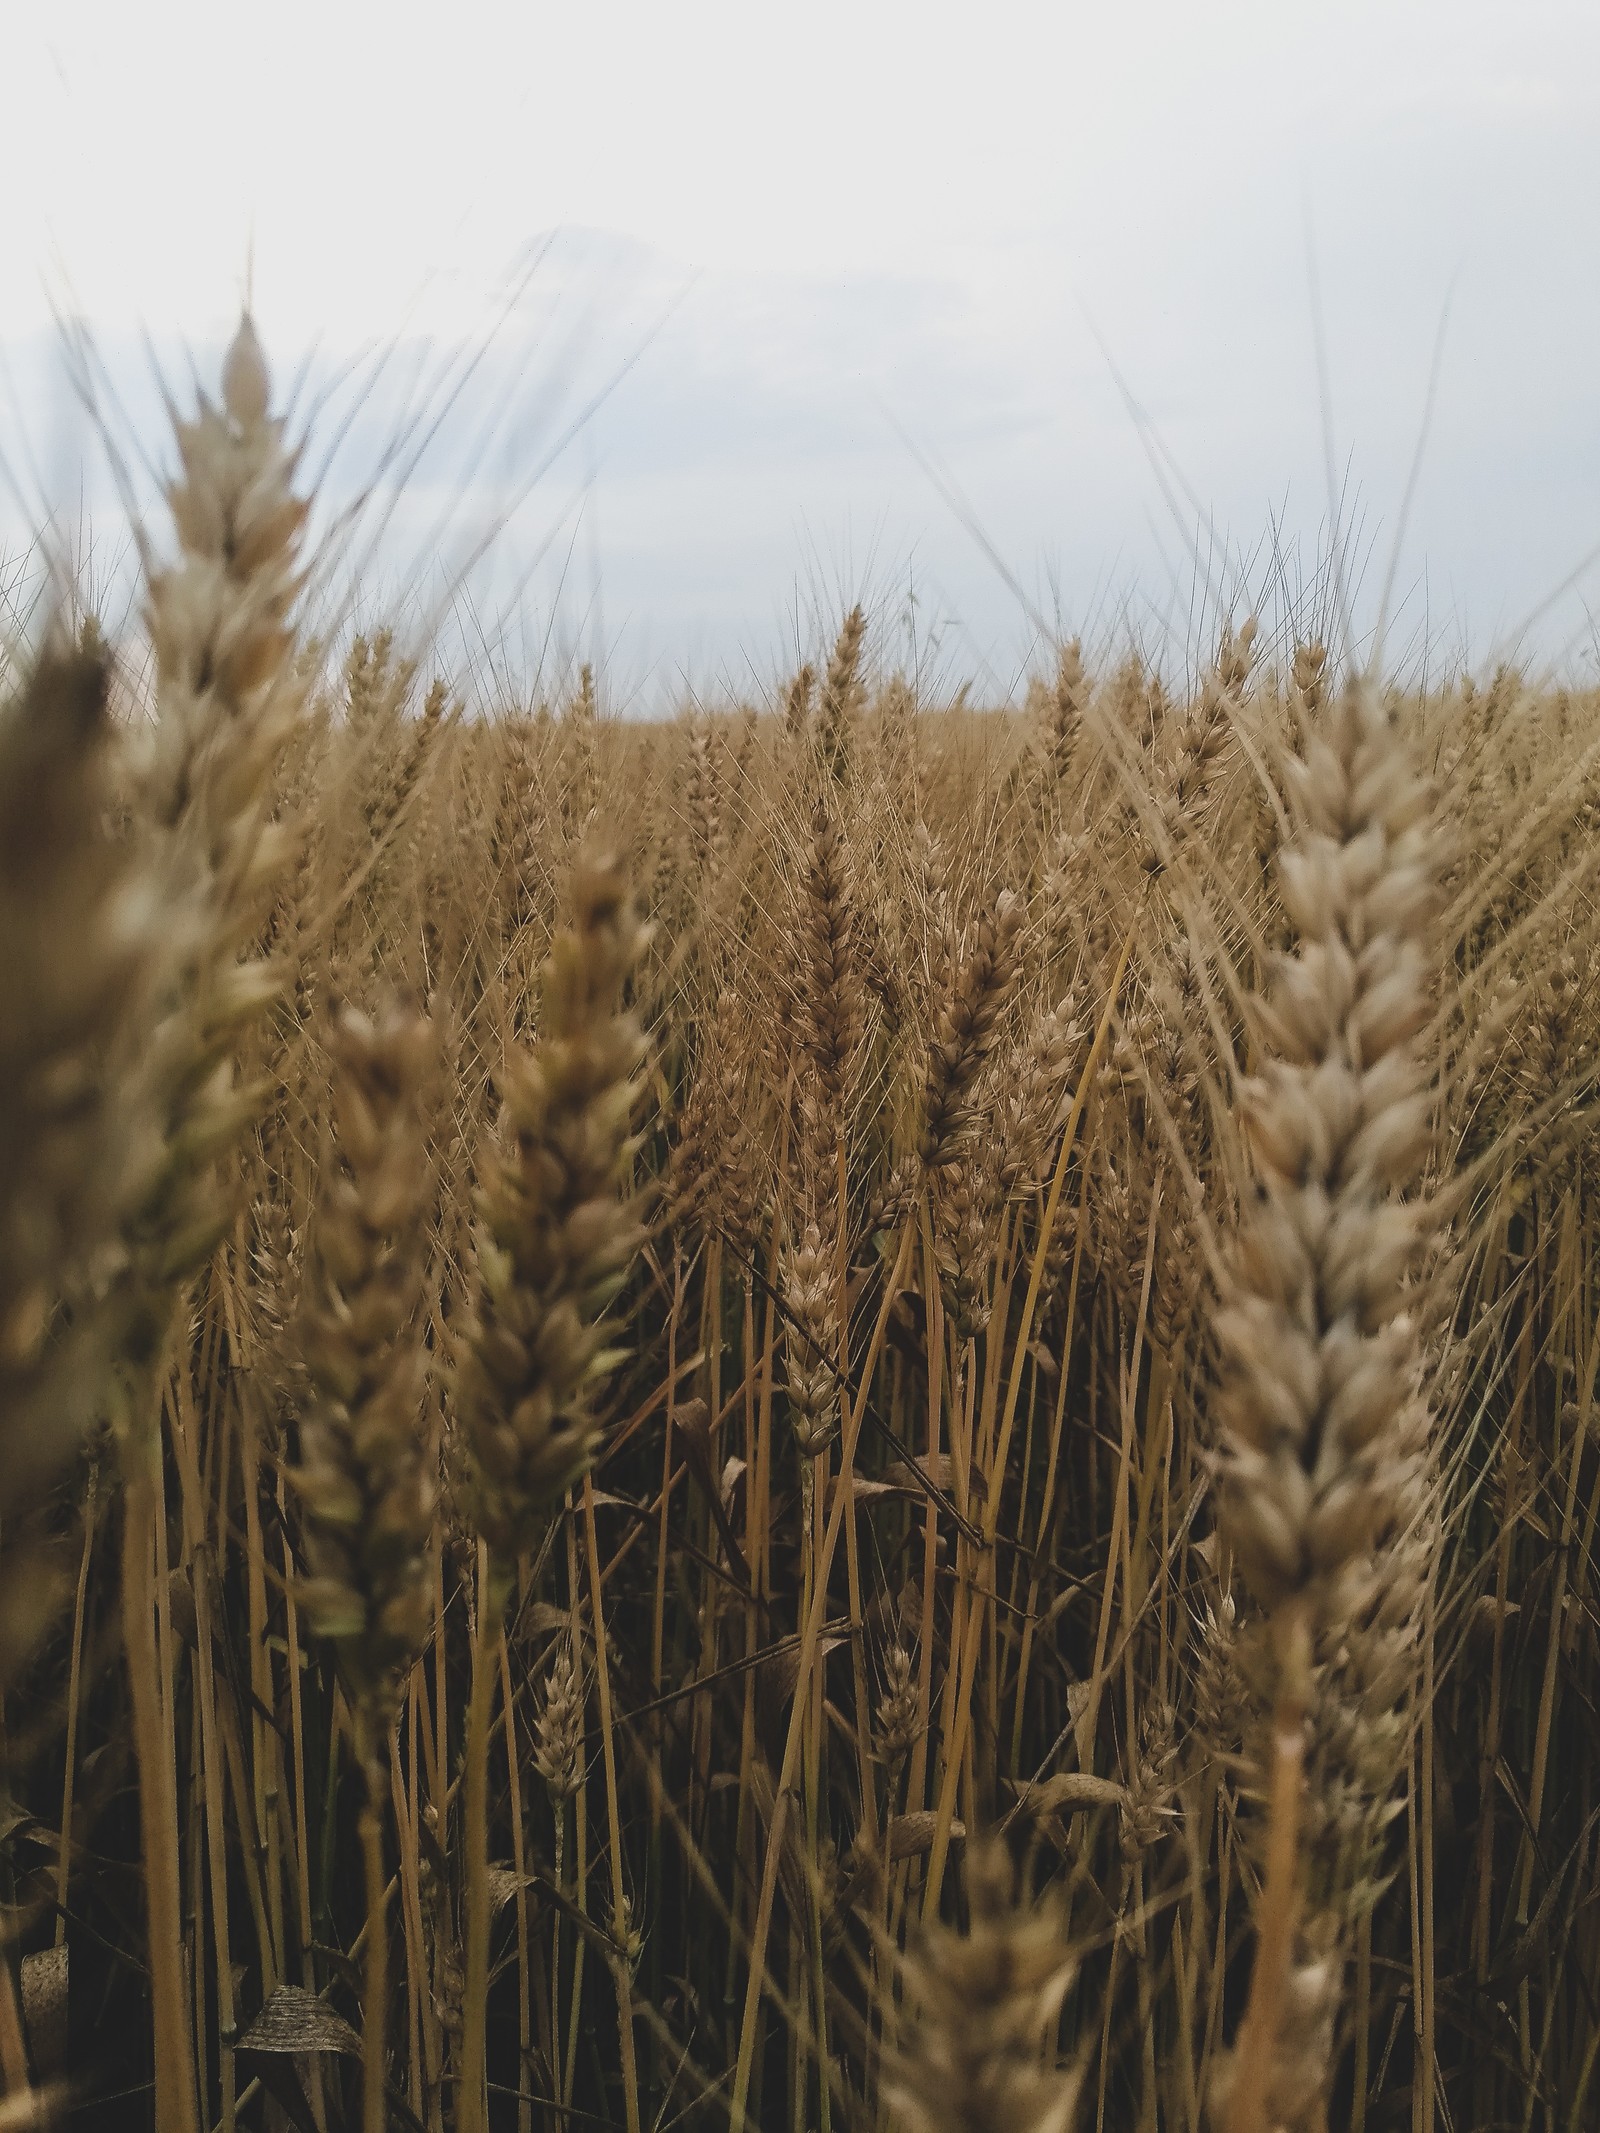 Harvest harvest - Russia, Summer, Wheat, Spikelet, Field, My